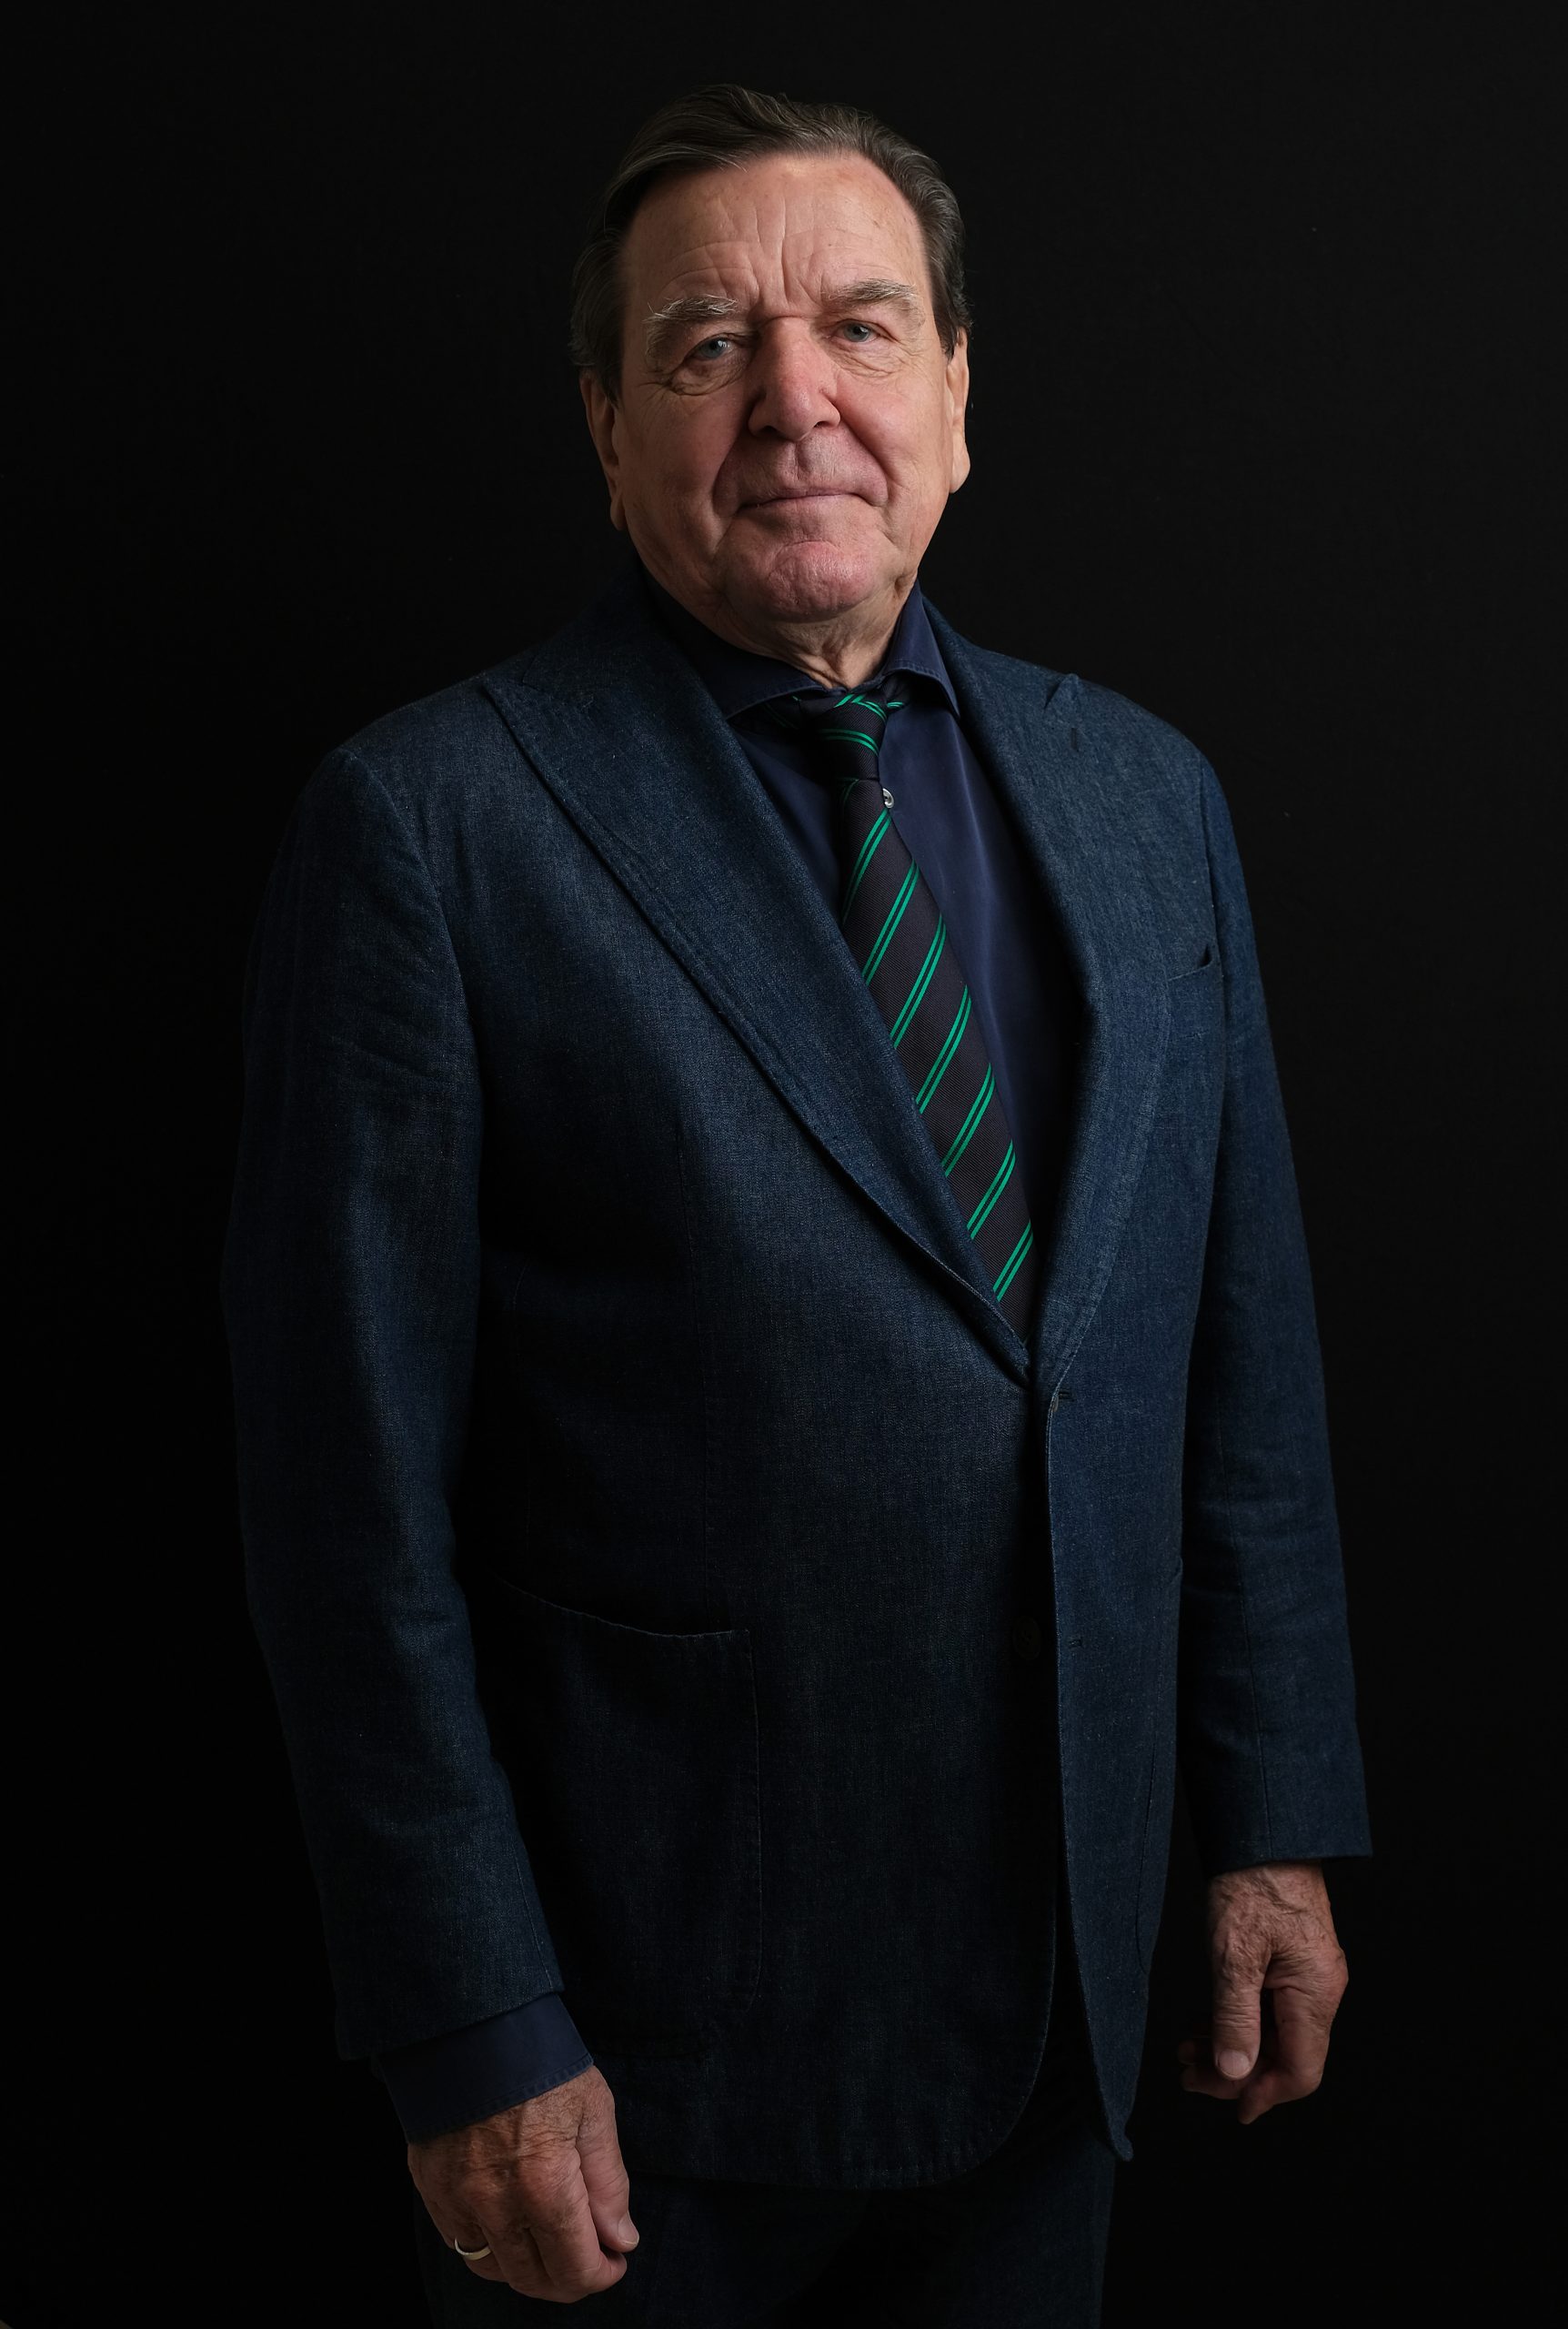 Gerhard Schröder